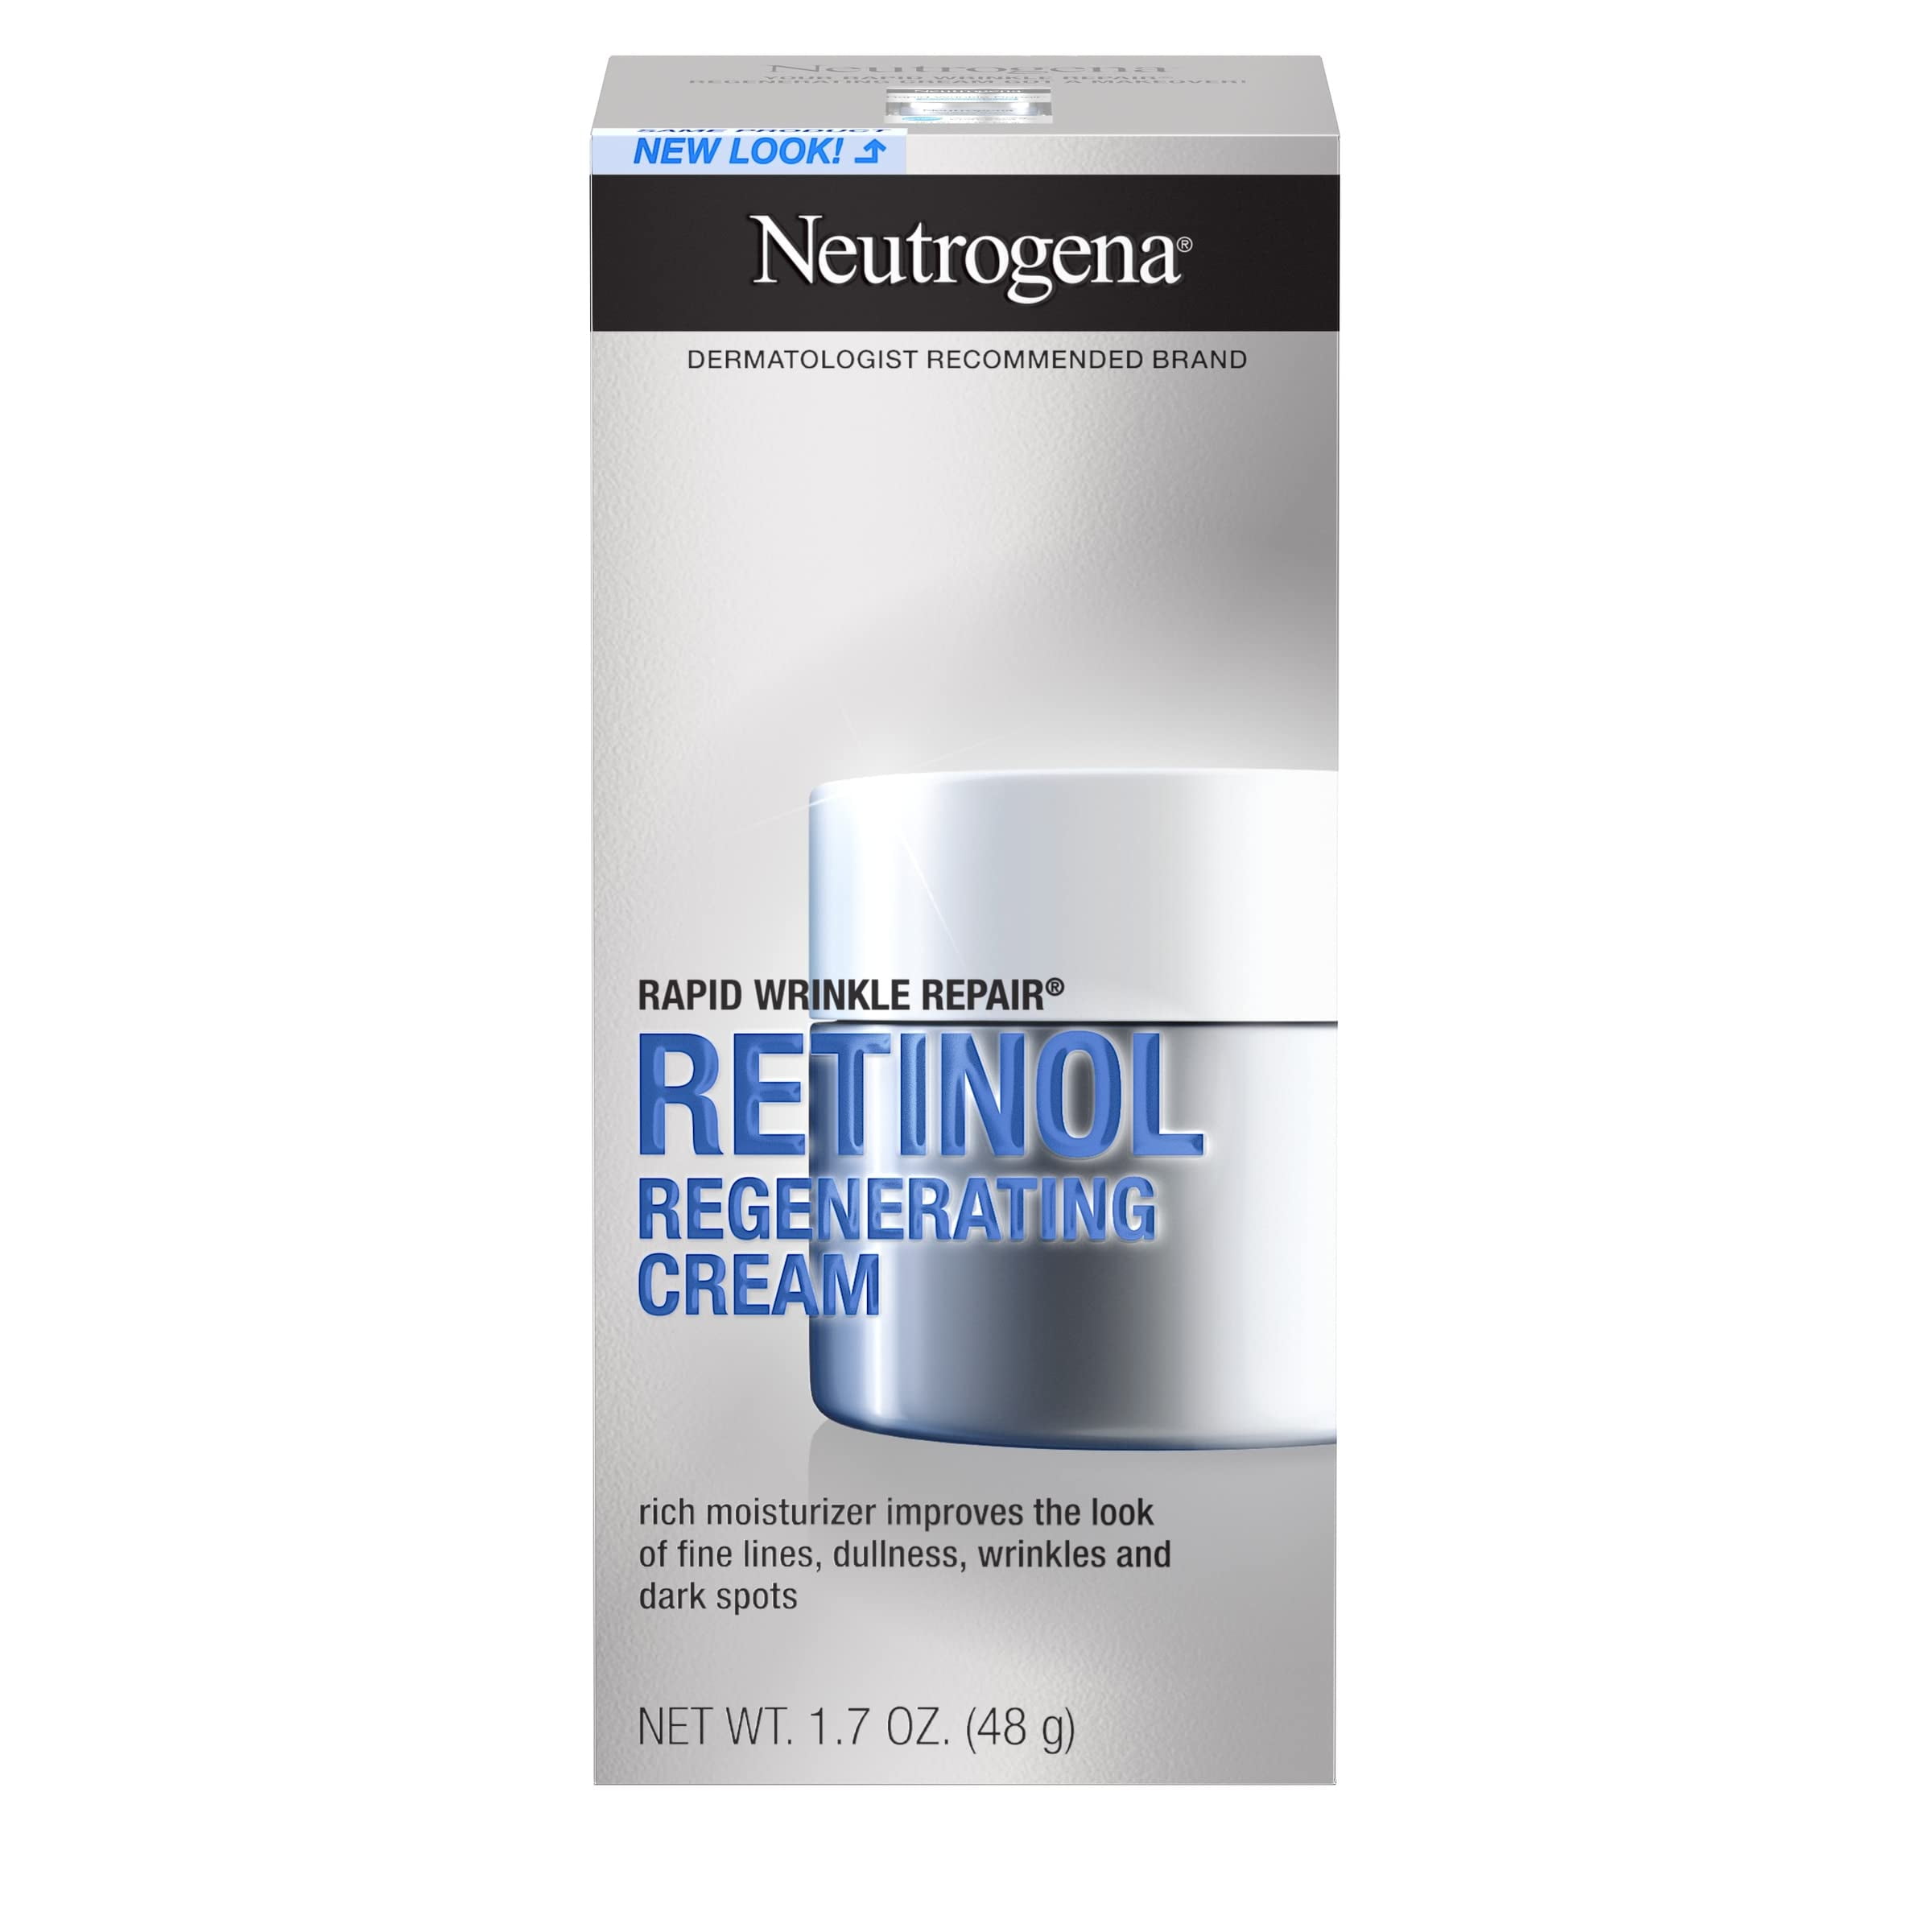 Neutrogena Rapid Firming Peptide Contour Lift Face Moisturizer Cream, 1.7 oz